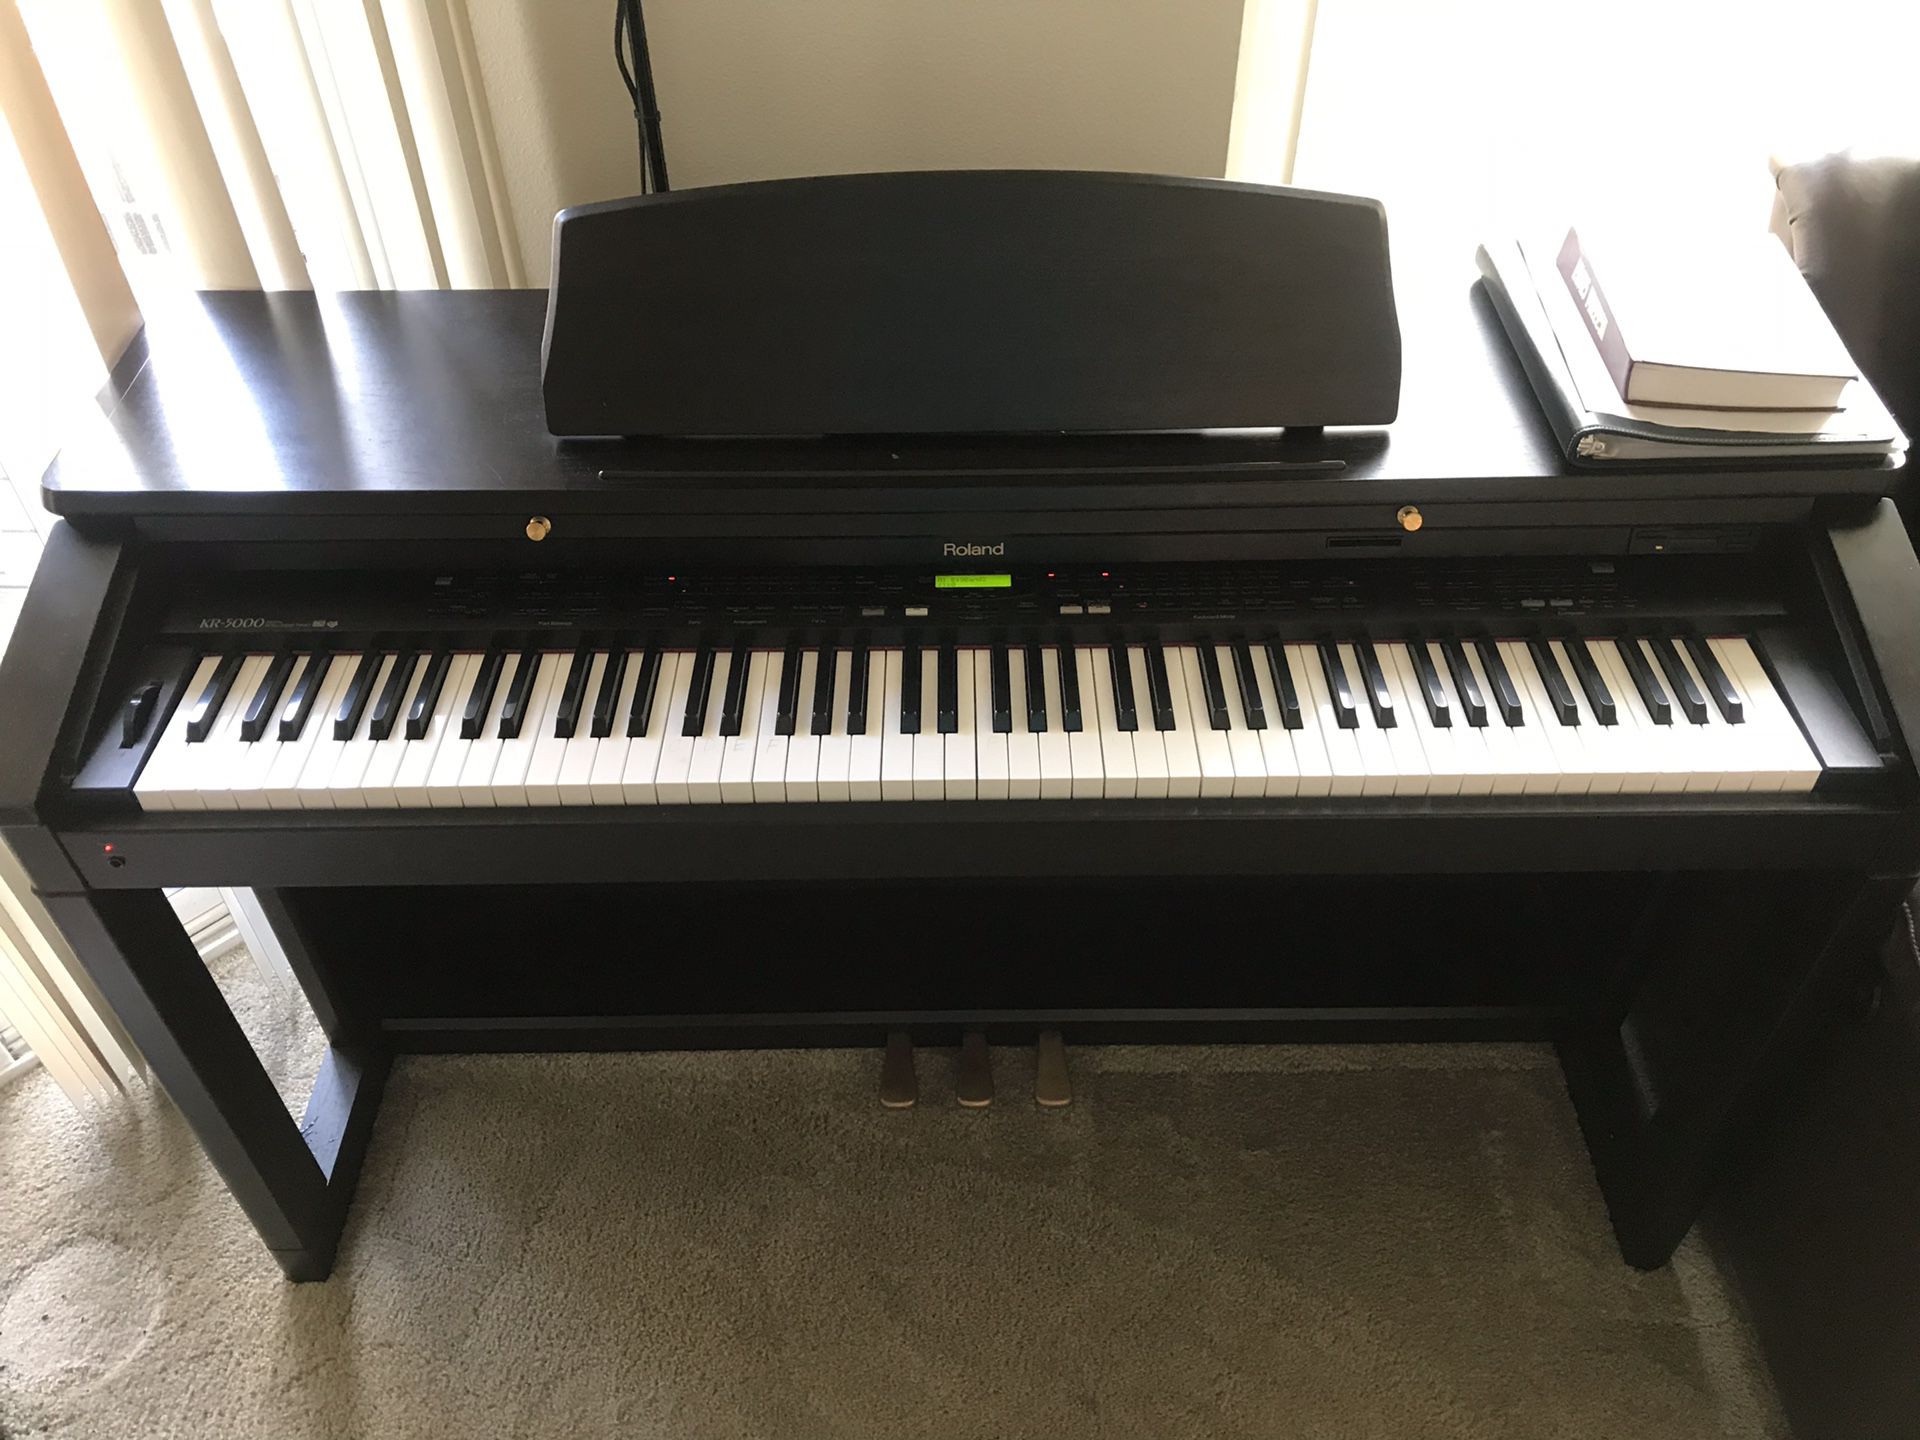 Roland KR-5000 digital piano